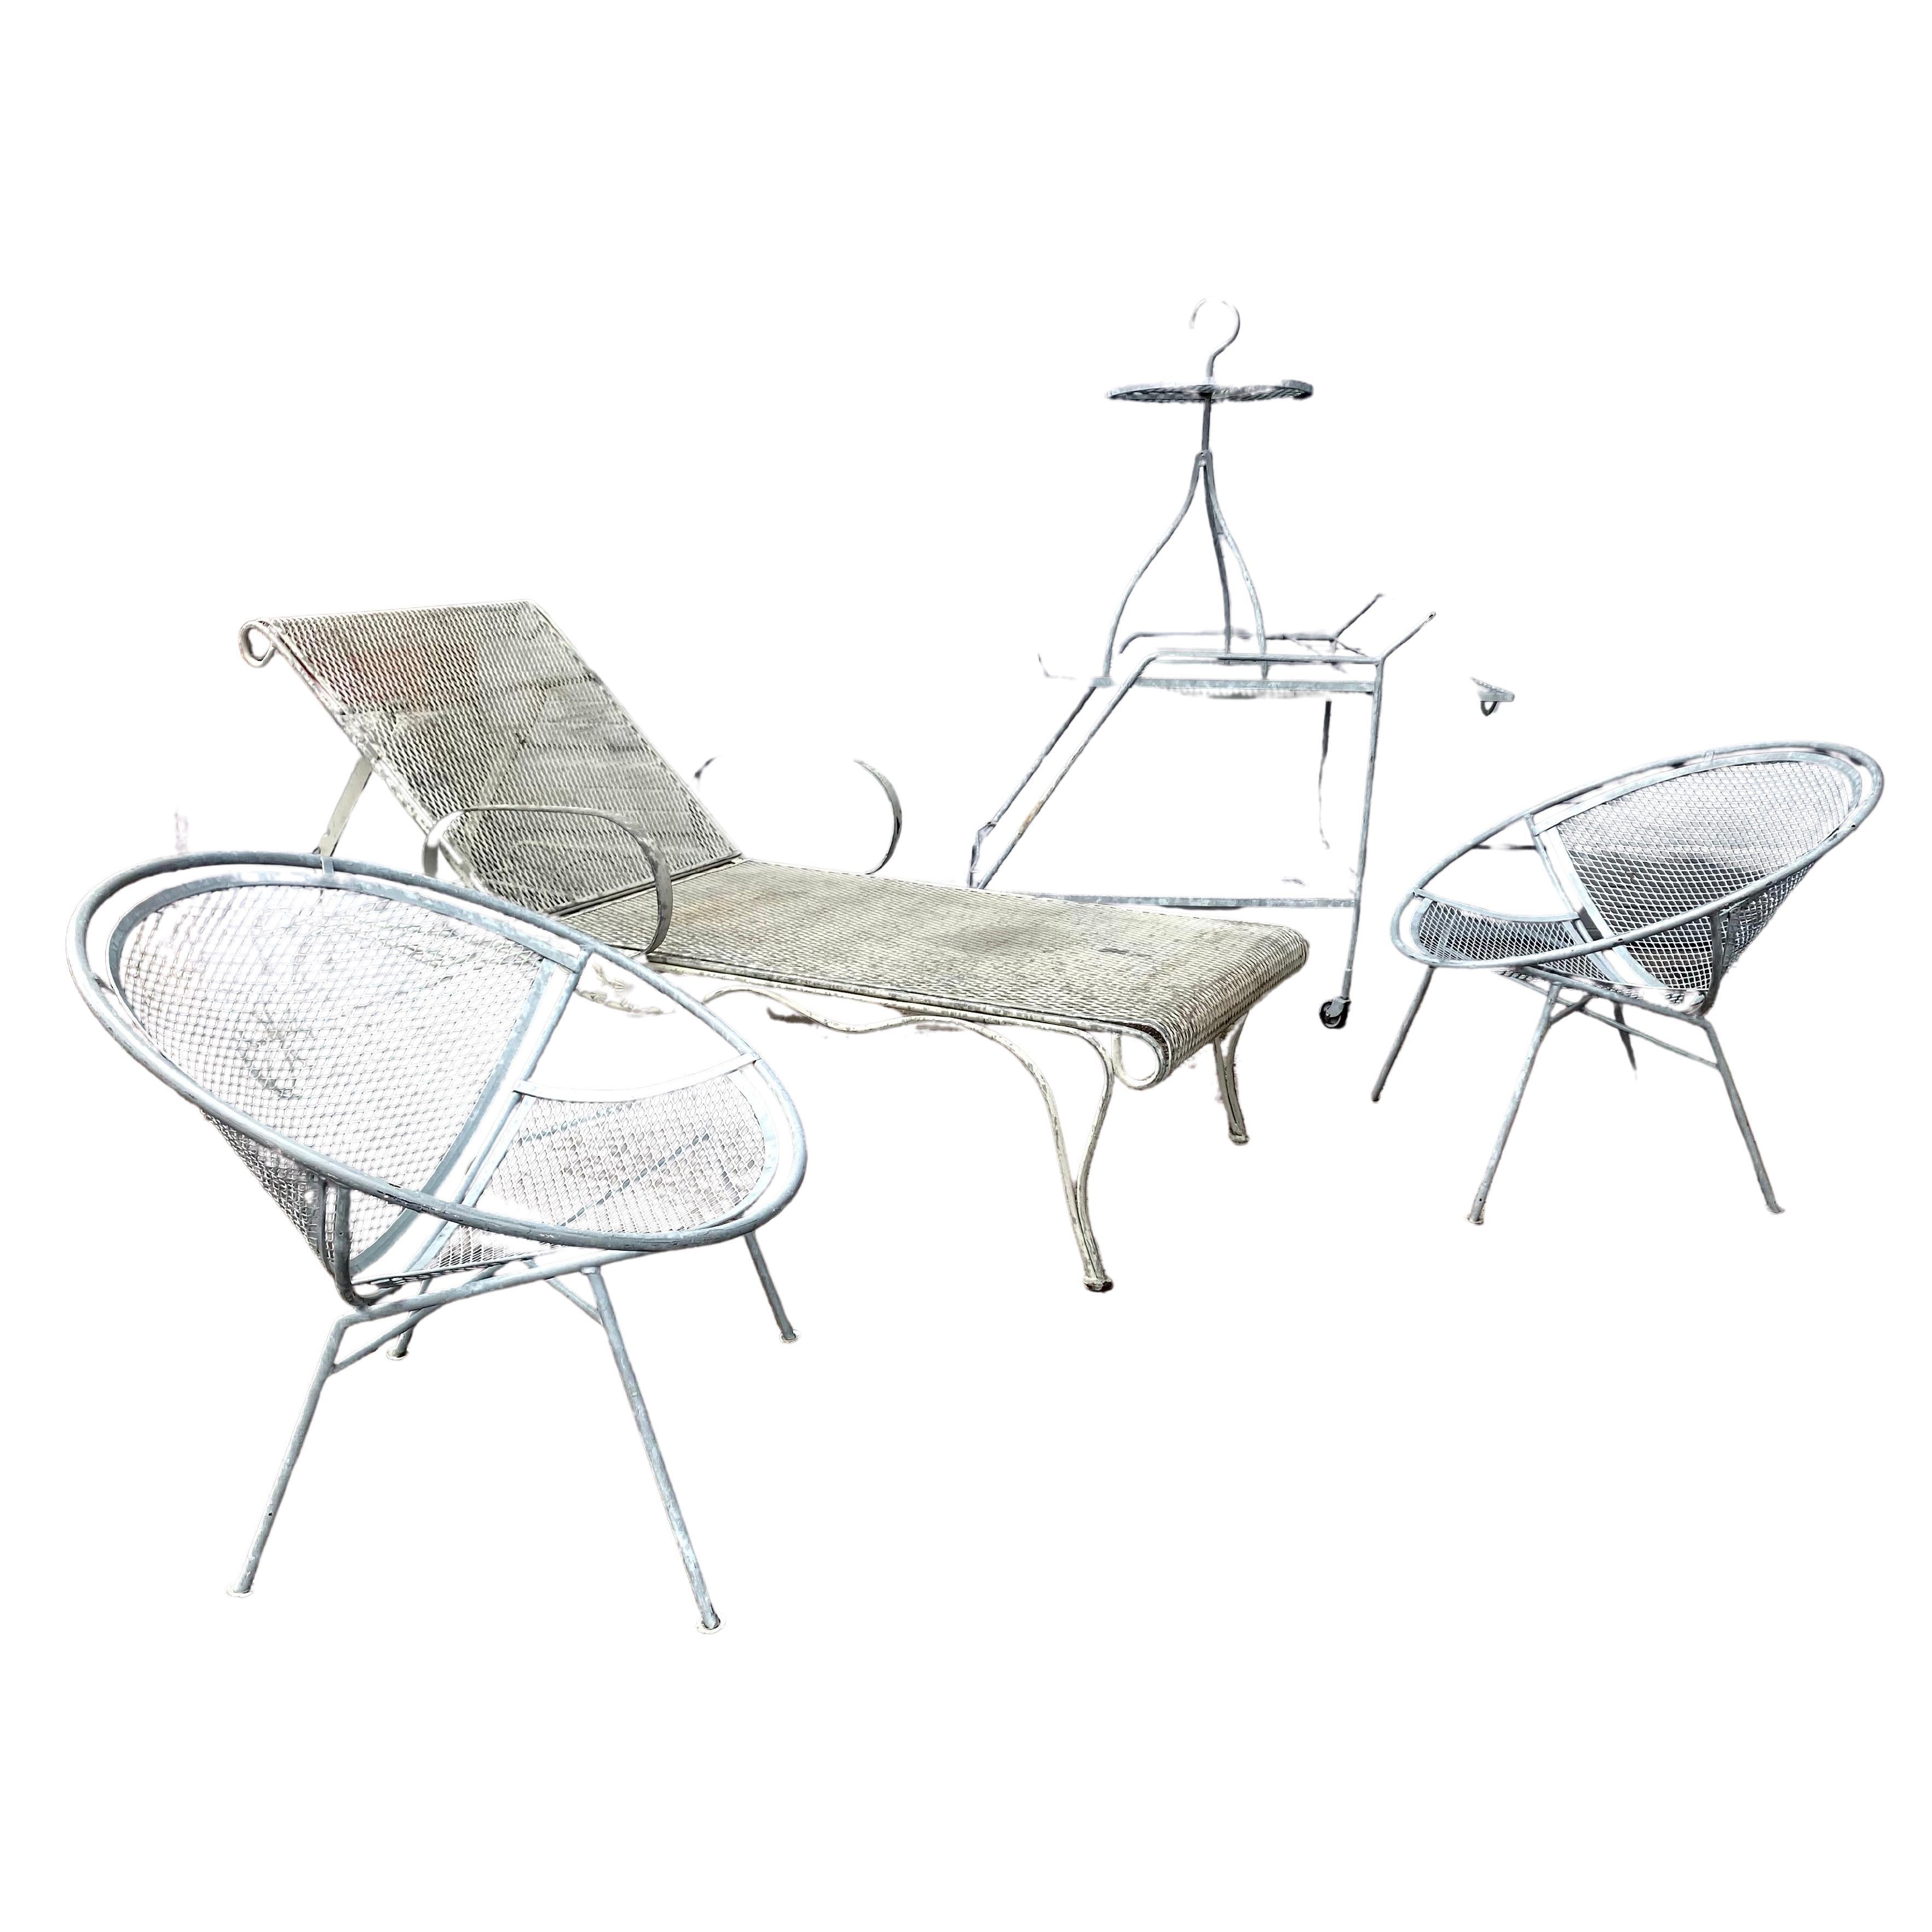 5 Piece's Salterini / Tempestini Garden Furnishings.Radar Chairs, Chaise, Cart